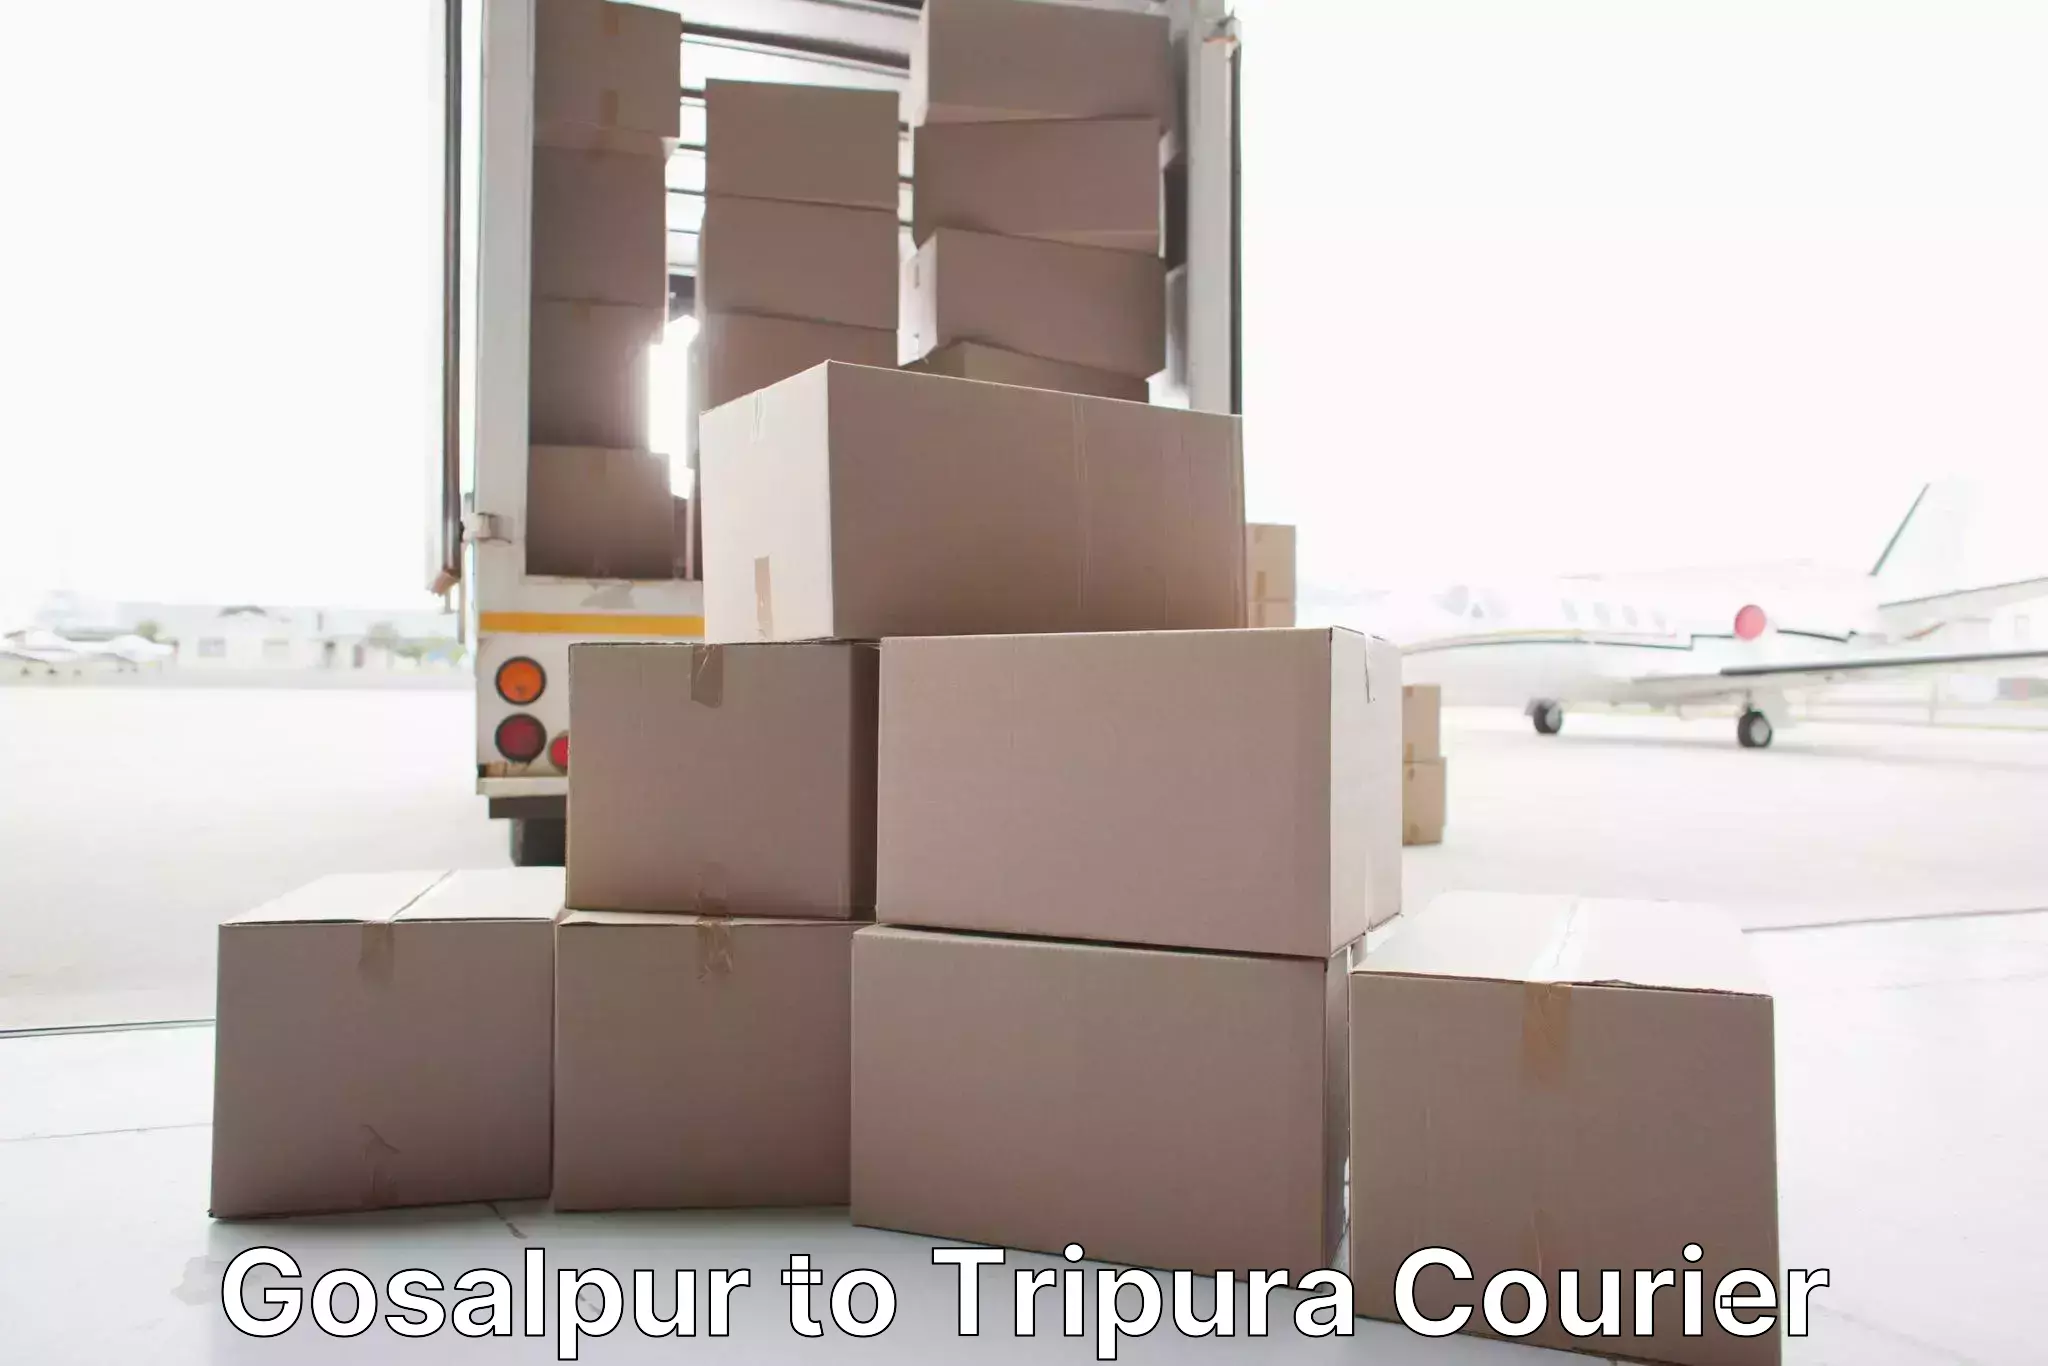 Professional moving assistance Gosalpur to Tripura